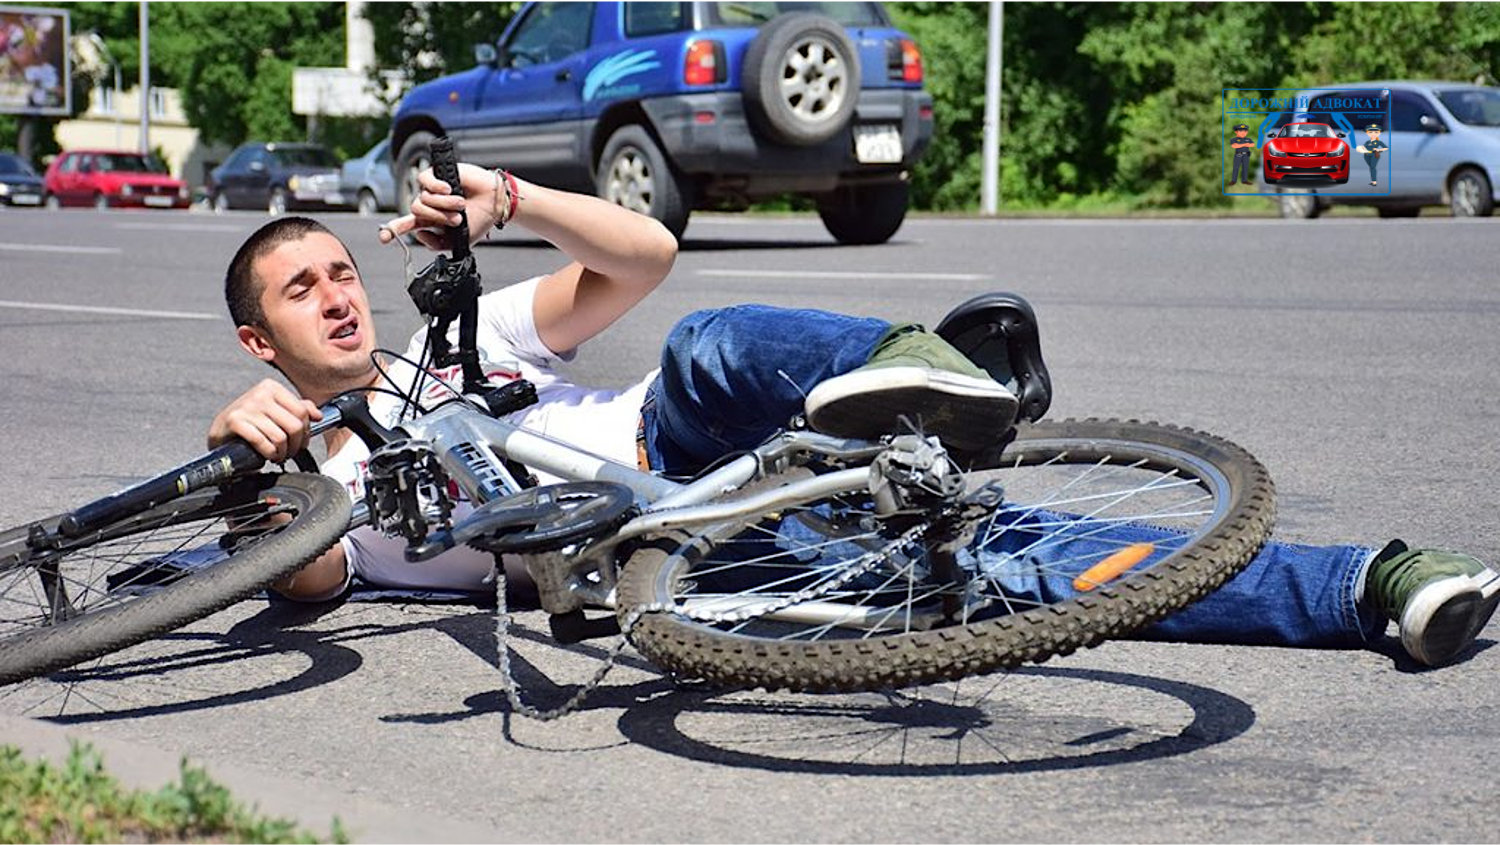 їзда рух велосипед велисипедист правила штраф ПДР поліція